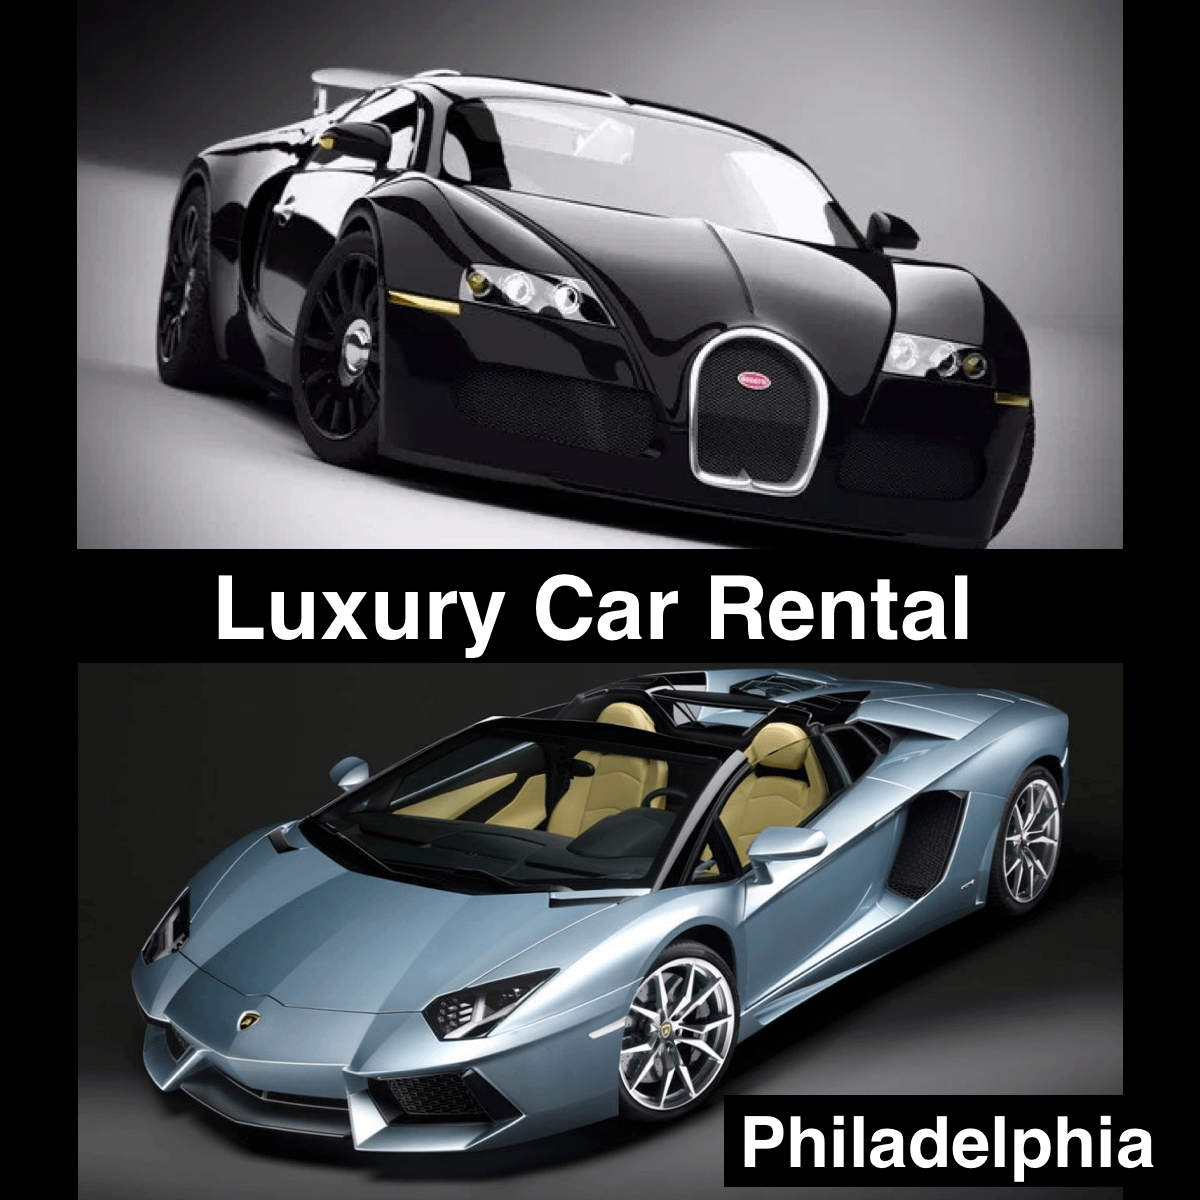 Luxury Car Rental -Philadelphia- Exotic Cars - All Best Top 10 Lists